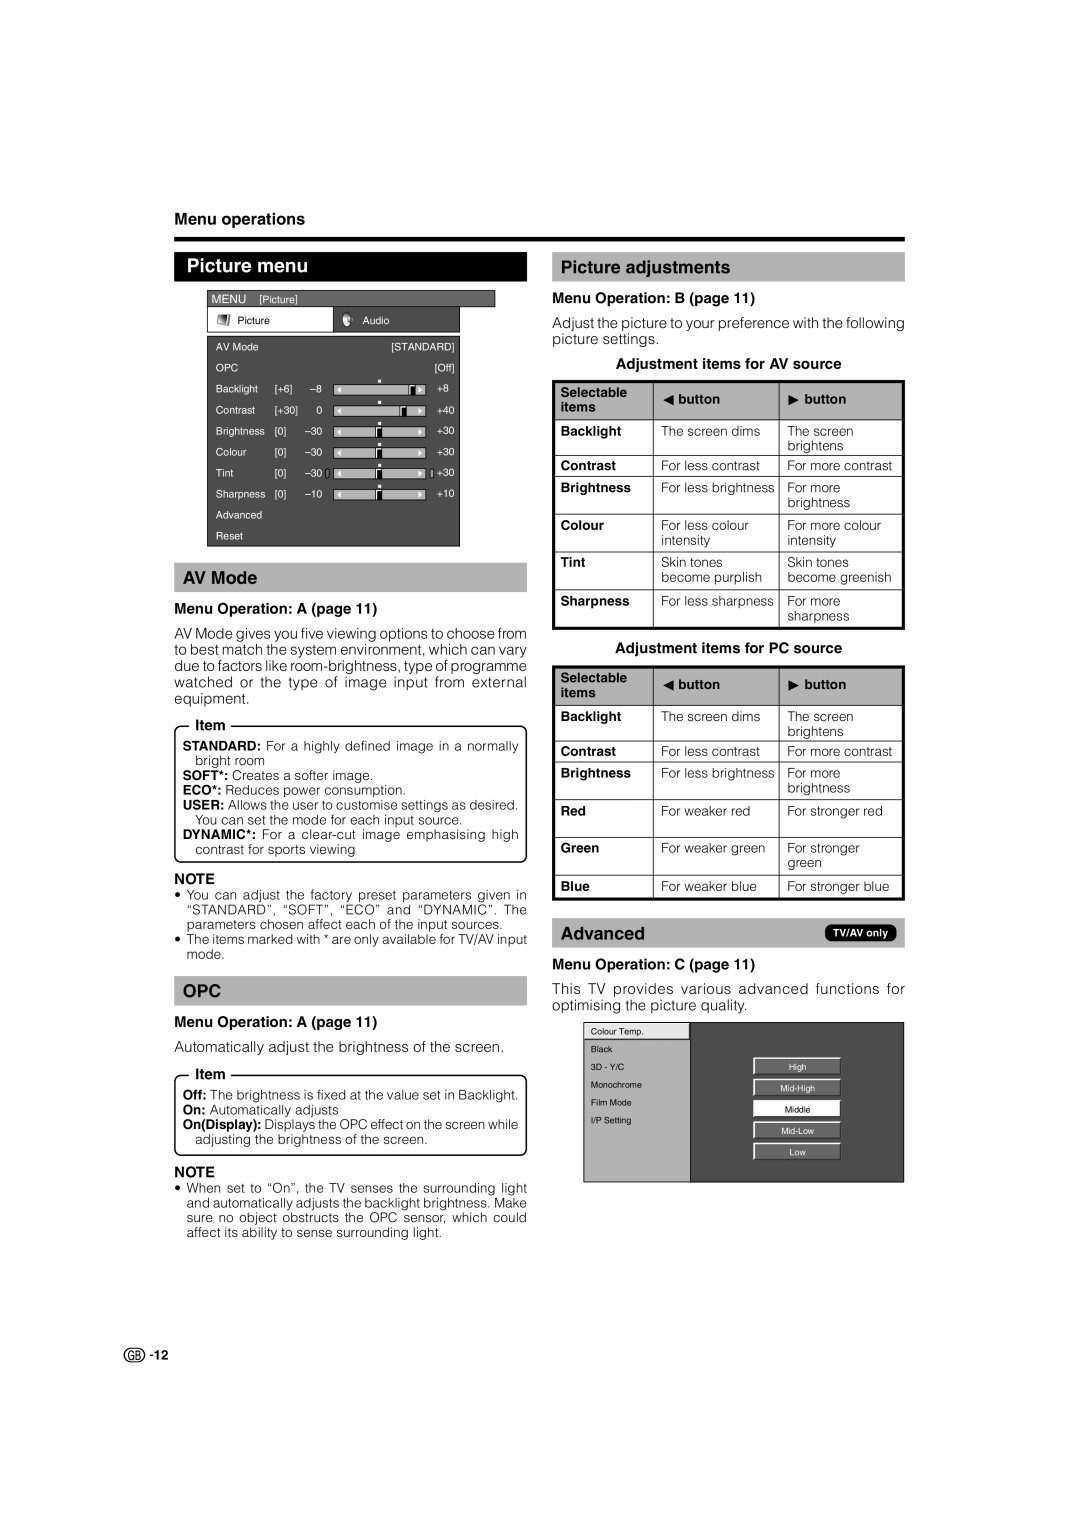 Sharp LC-32GA8E Picture menu, Picture adjustments, AV Mode, Advanced, Menu Operation B page, Menu Operation A page 